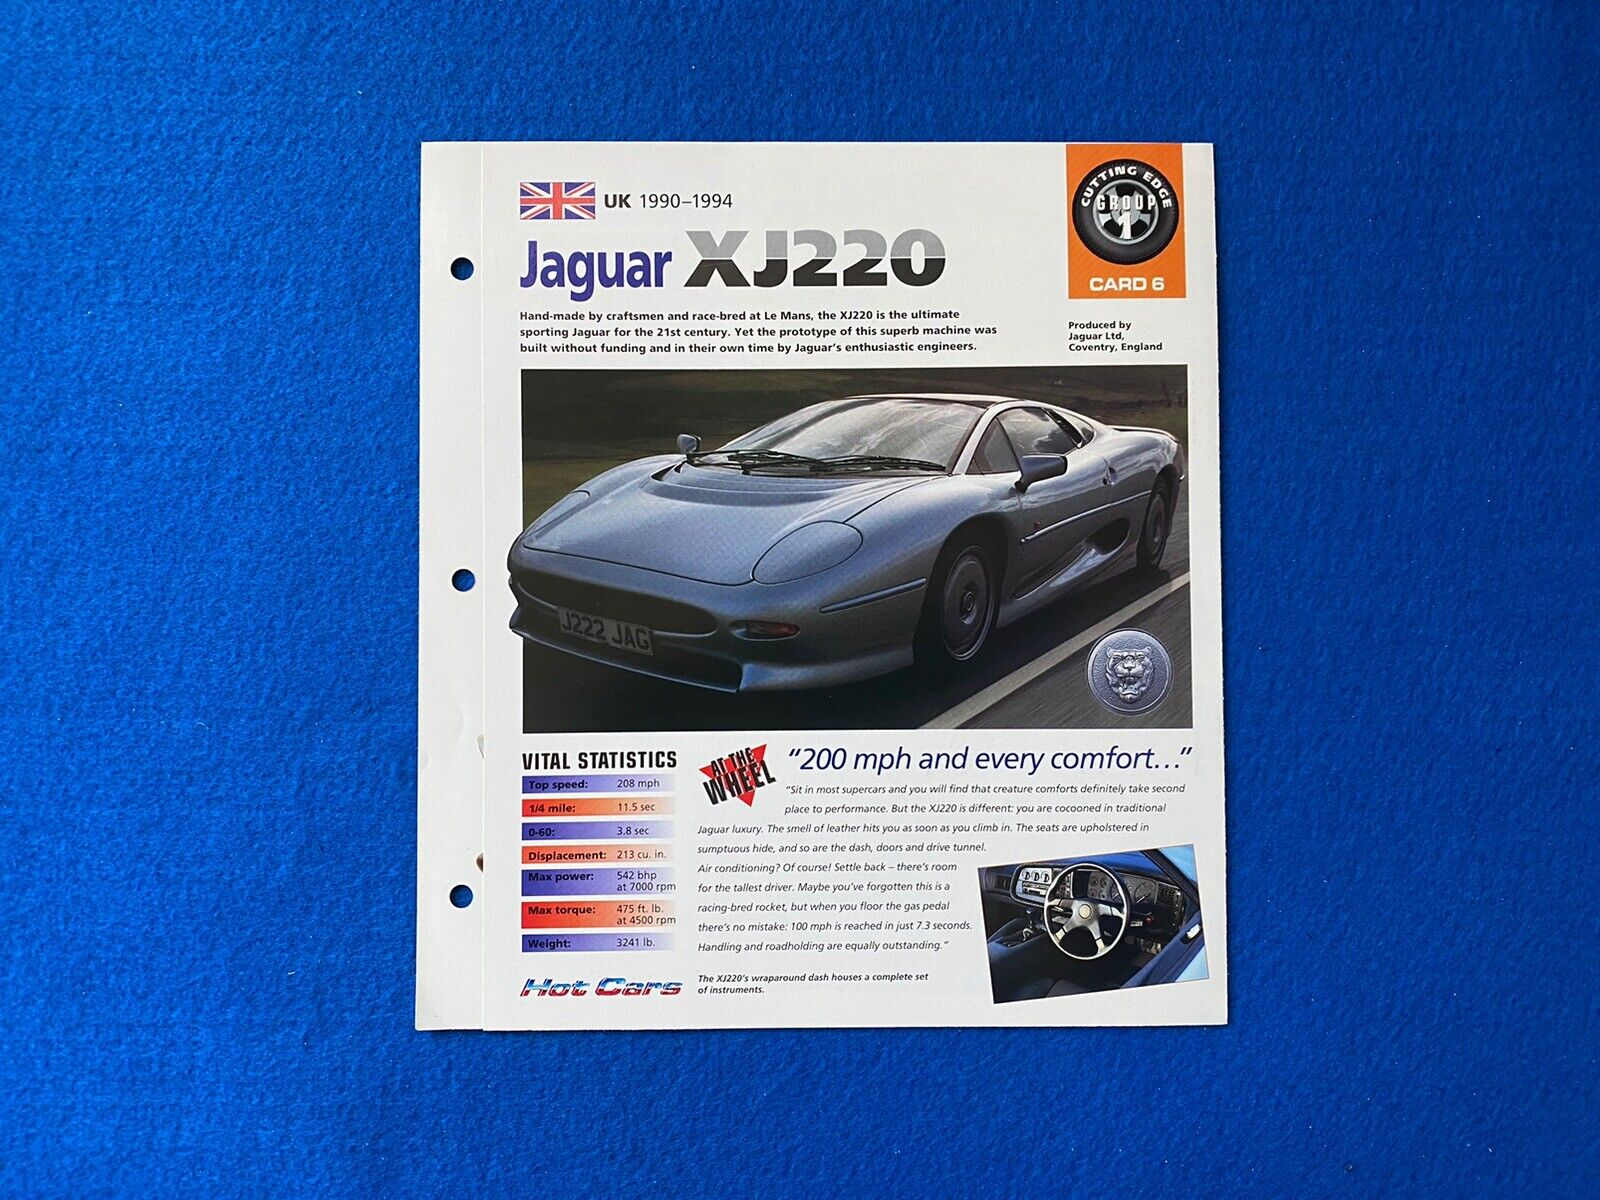 RARE 1990-1994 Jaguar XJ220 Spec Sheet Brochure Photo Poster Card 6 Group #1